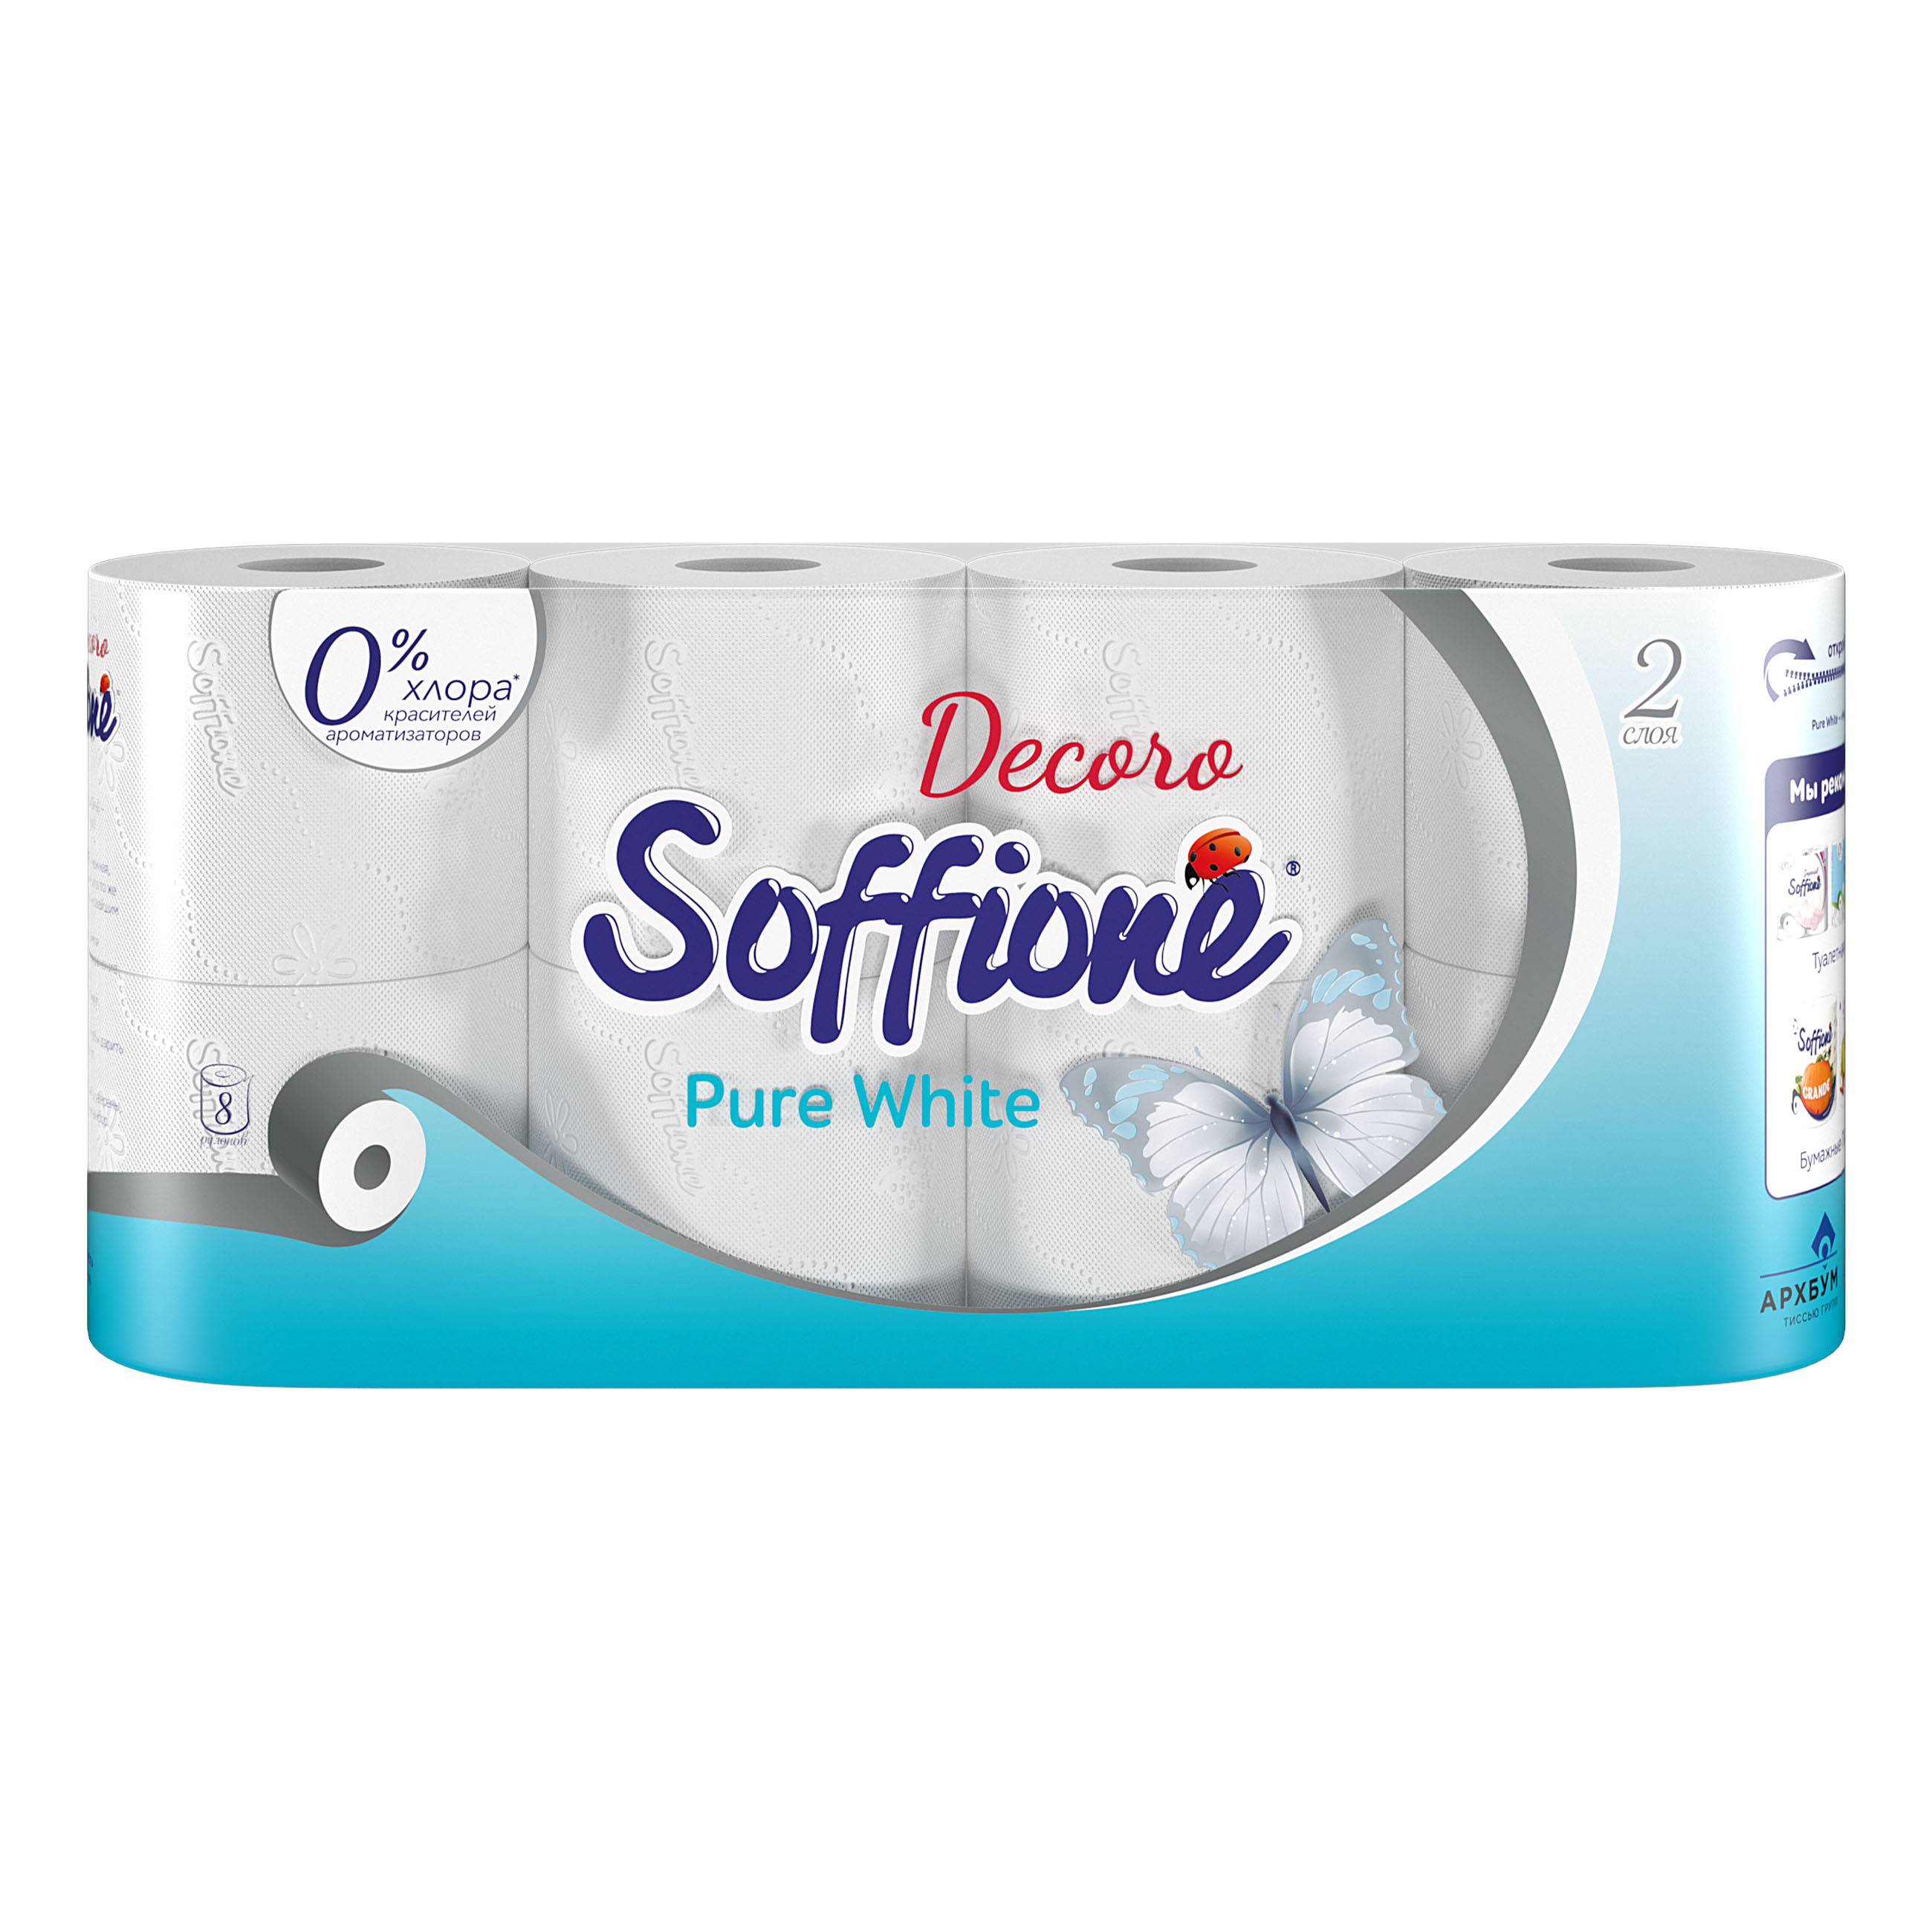 Туалетная бумага Soffione Pure White двухслойная белая, 8 рулонов туалетная бумага soffione decoro двухслойная с голубым тиснением 12 рулонов